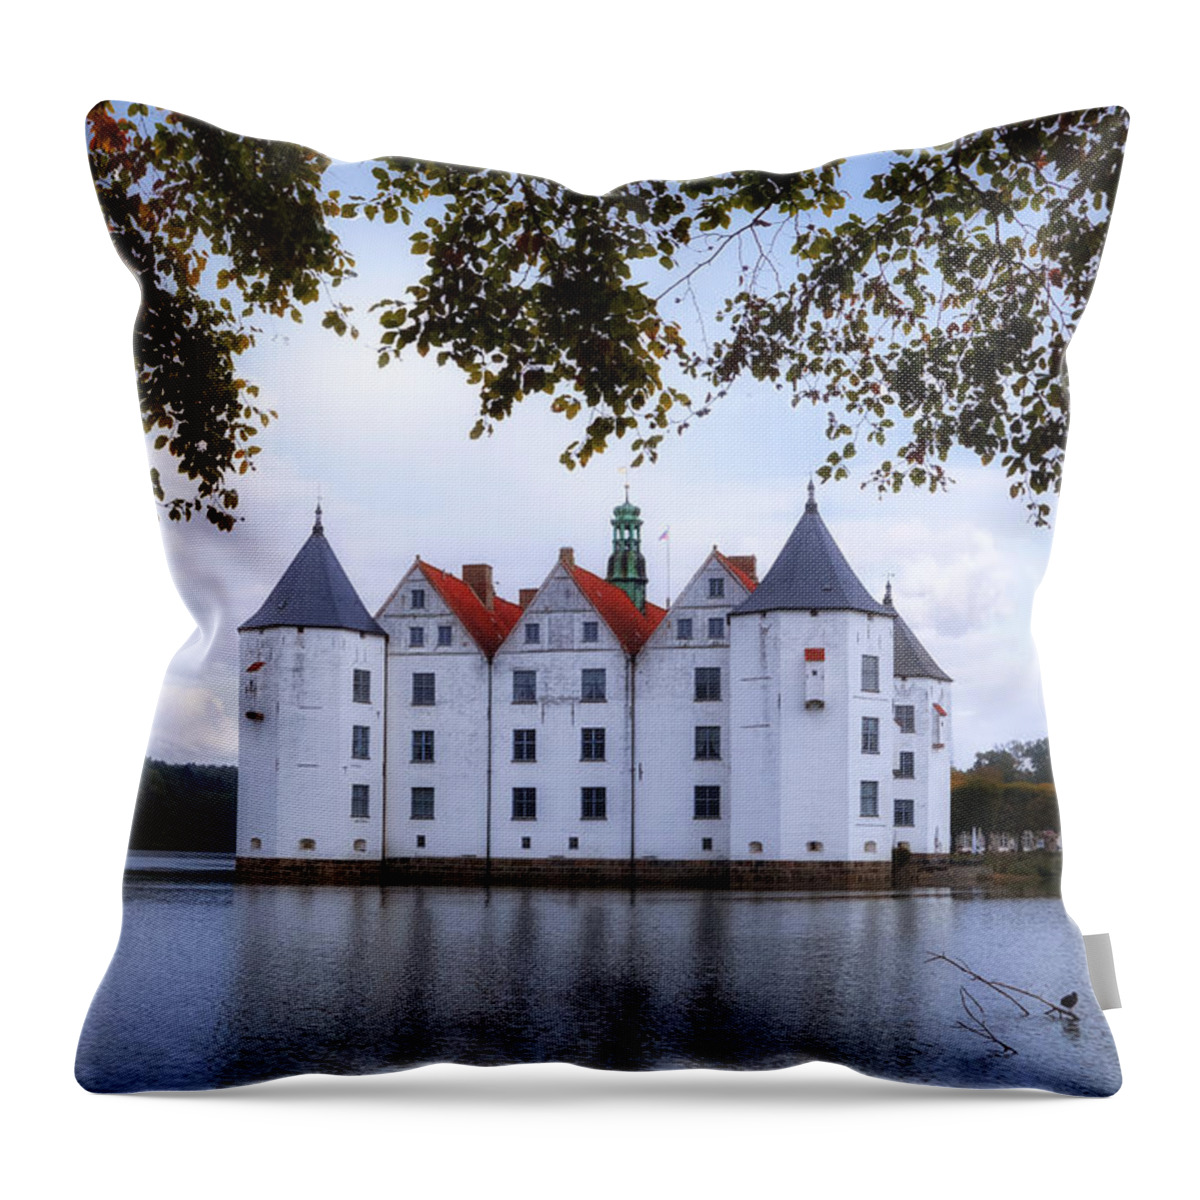 Gluecksburg Castle Throw Pillow featuring the photograph Gluecksburg Castle - Germany #5 by Joana Kruse